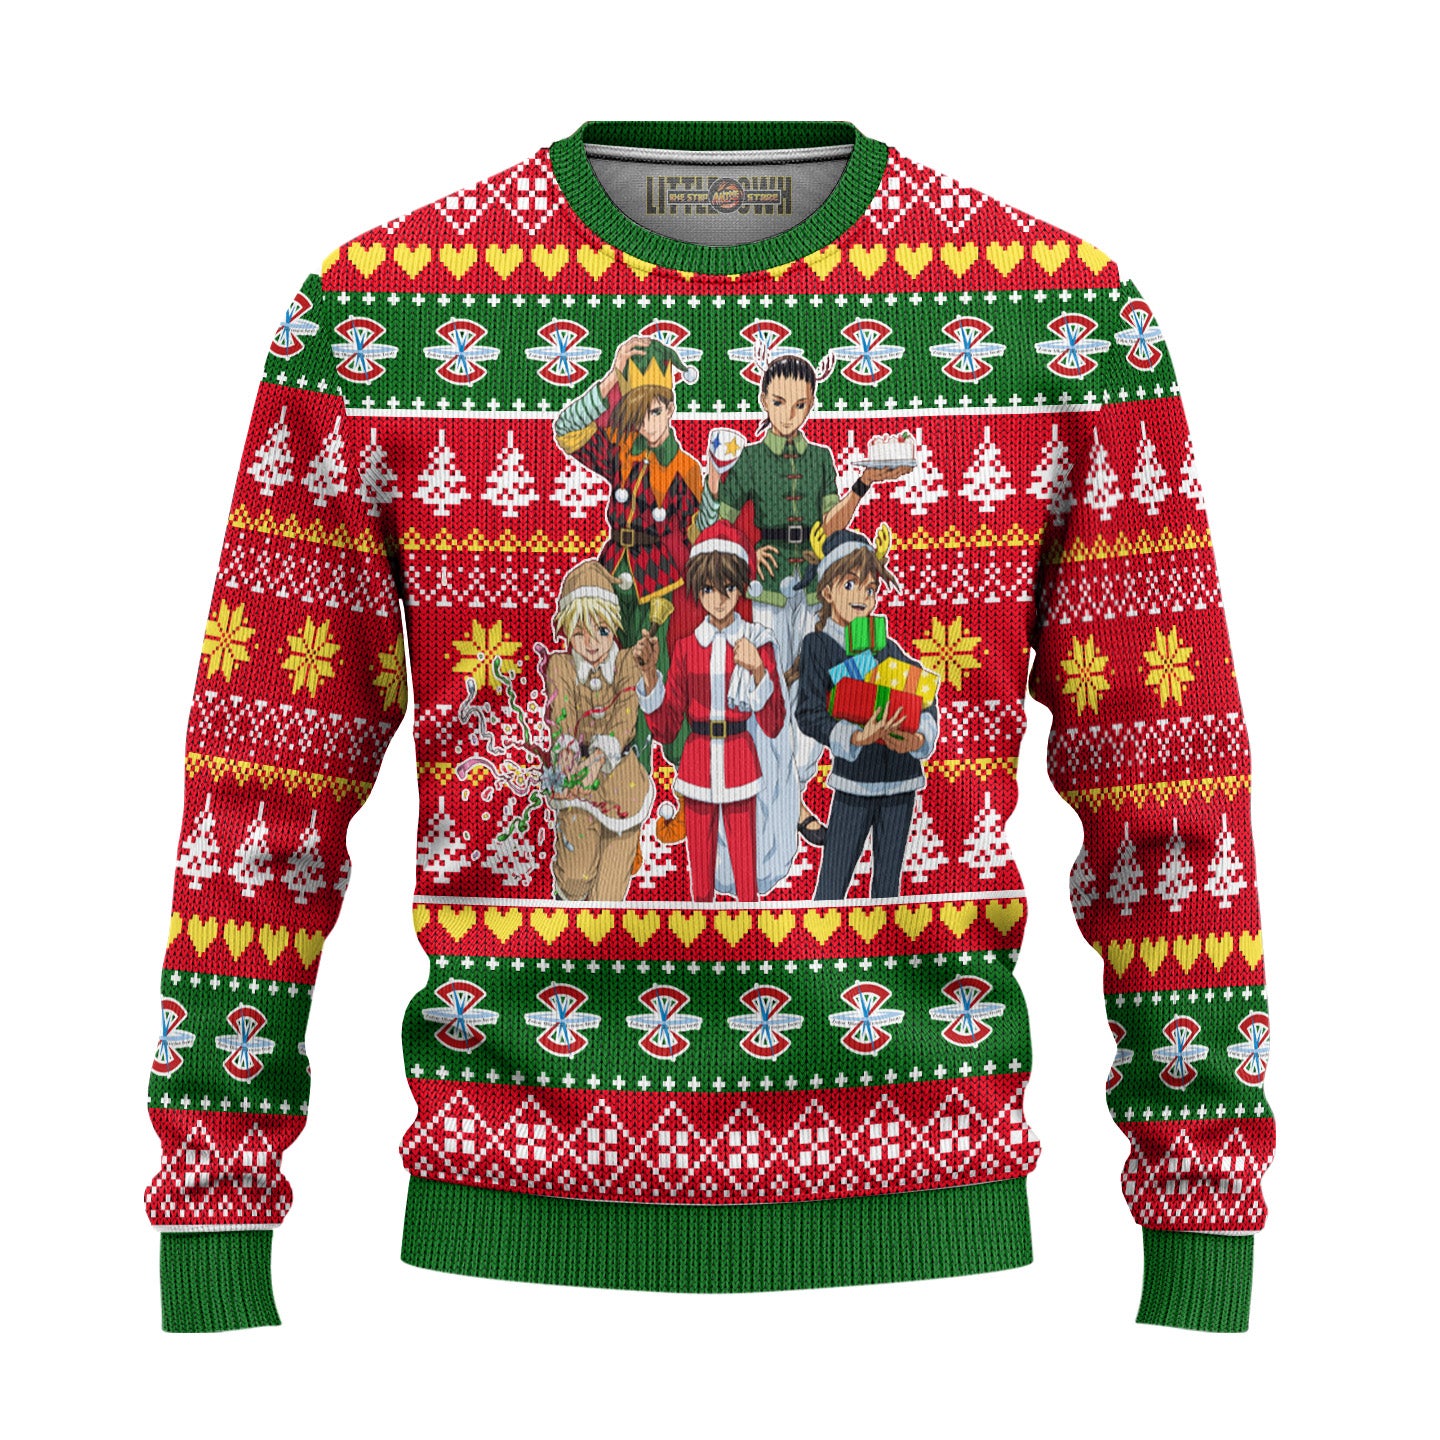 Ram Anime Ugly Christmas Sweater Custom Re Zero New Design